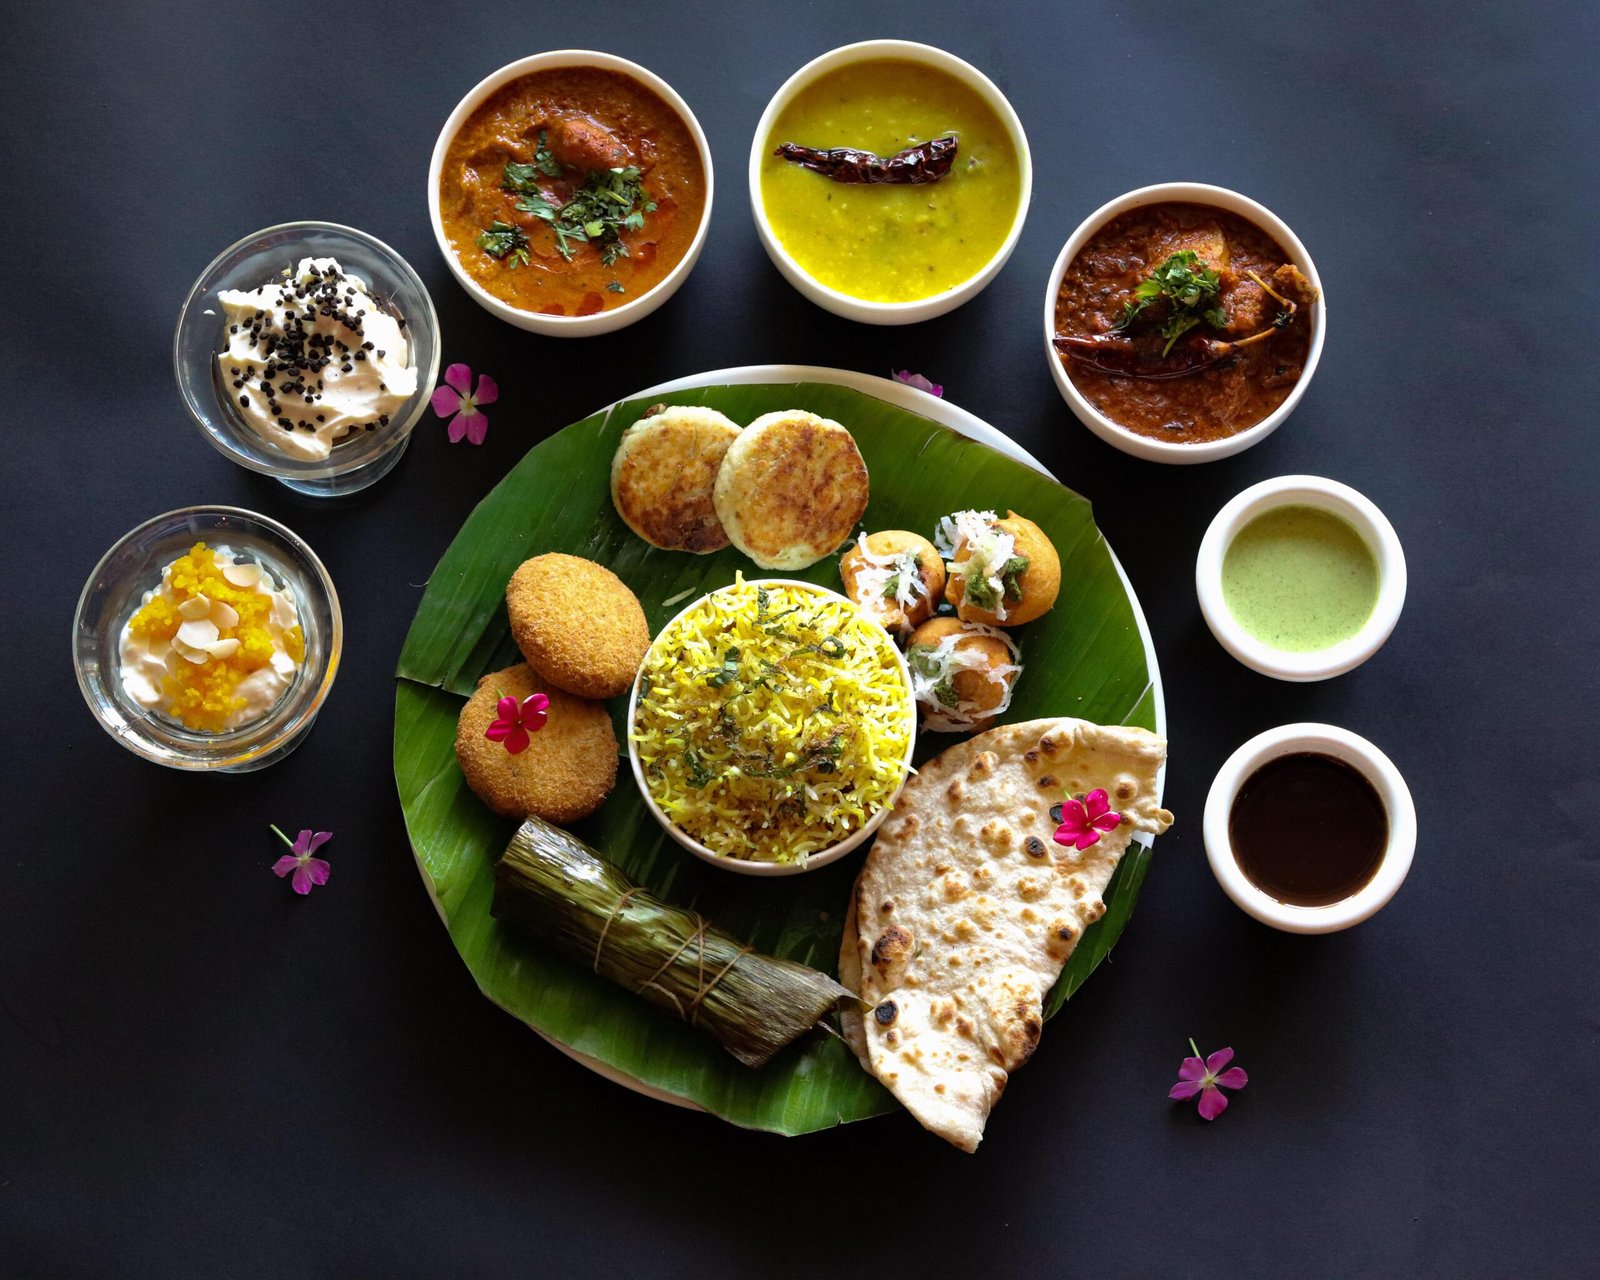 This Diwali Menu At Cafe Funkie Town Celebrates Togetherness 